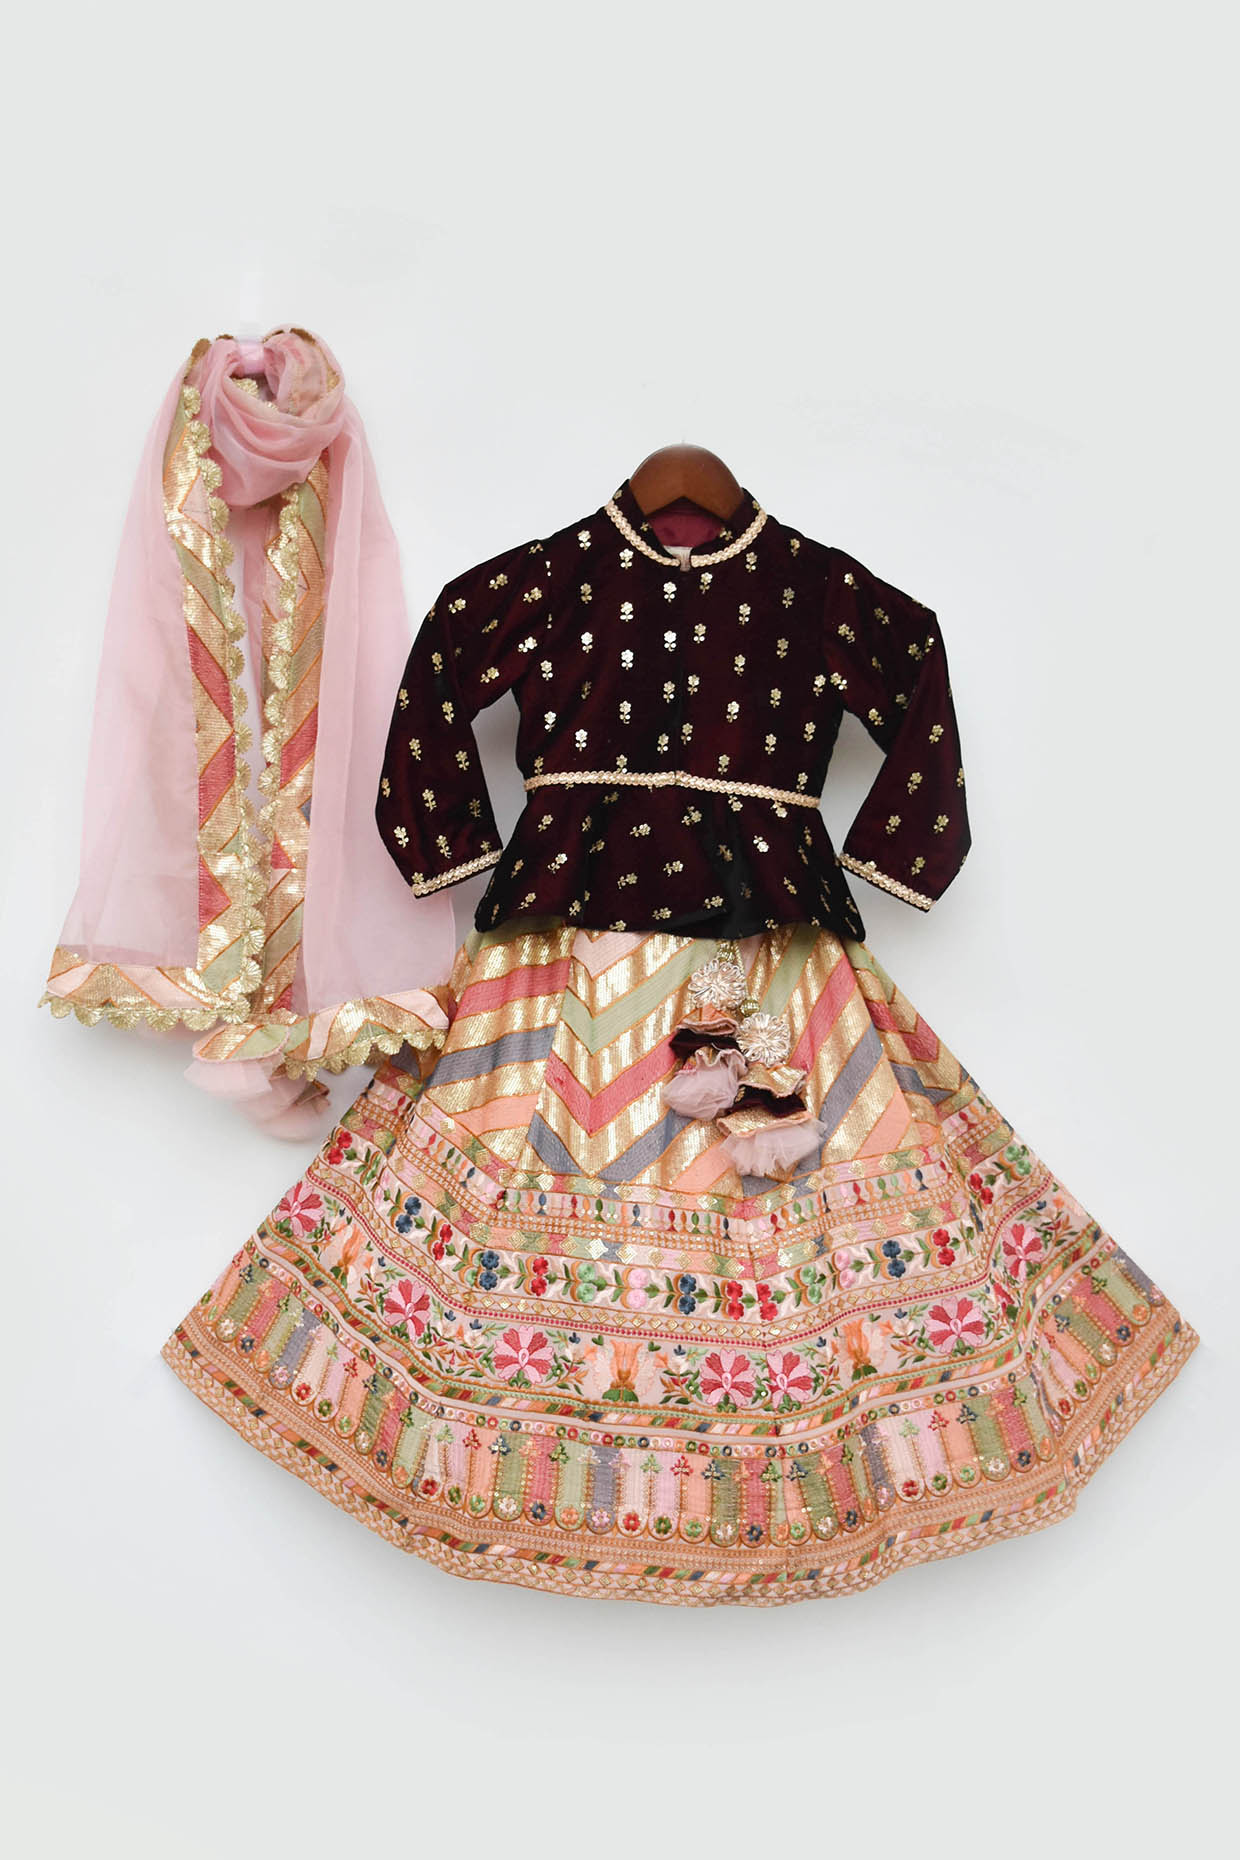 Indian Pakistani Bollywood New Designer Lengha Velvet Wear Wedding Lehenga  Choli | eBay